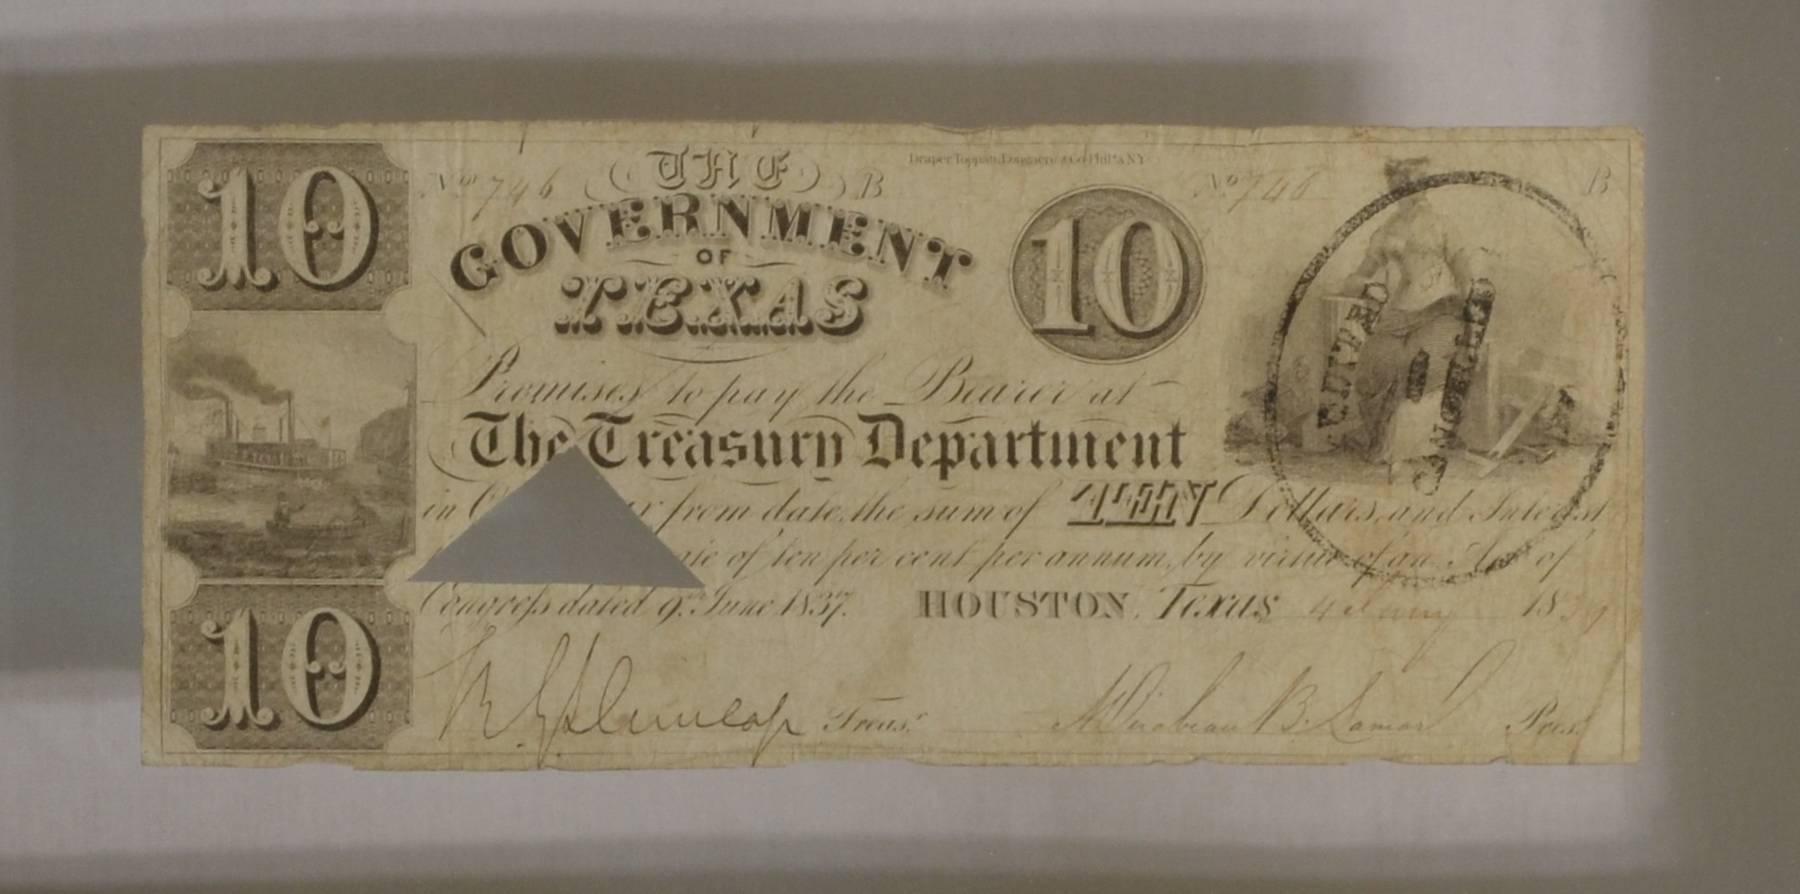 American Classical Republic of Texas $10 Note, Antique circa 1837 For Sale